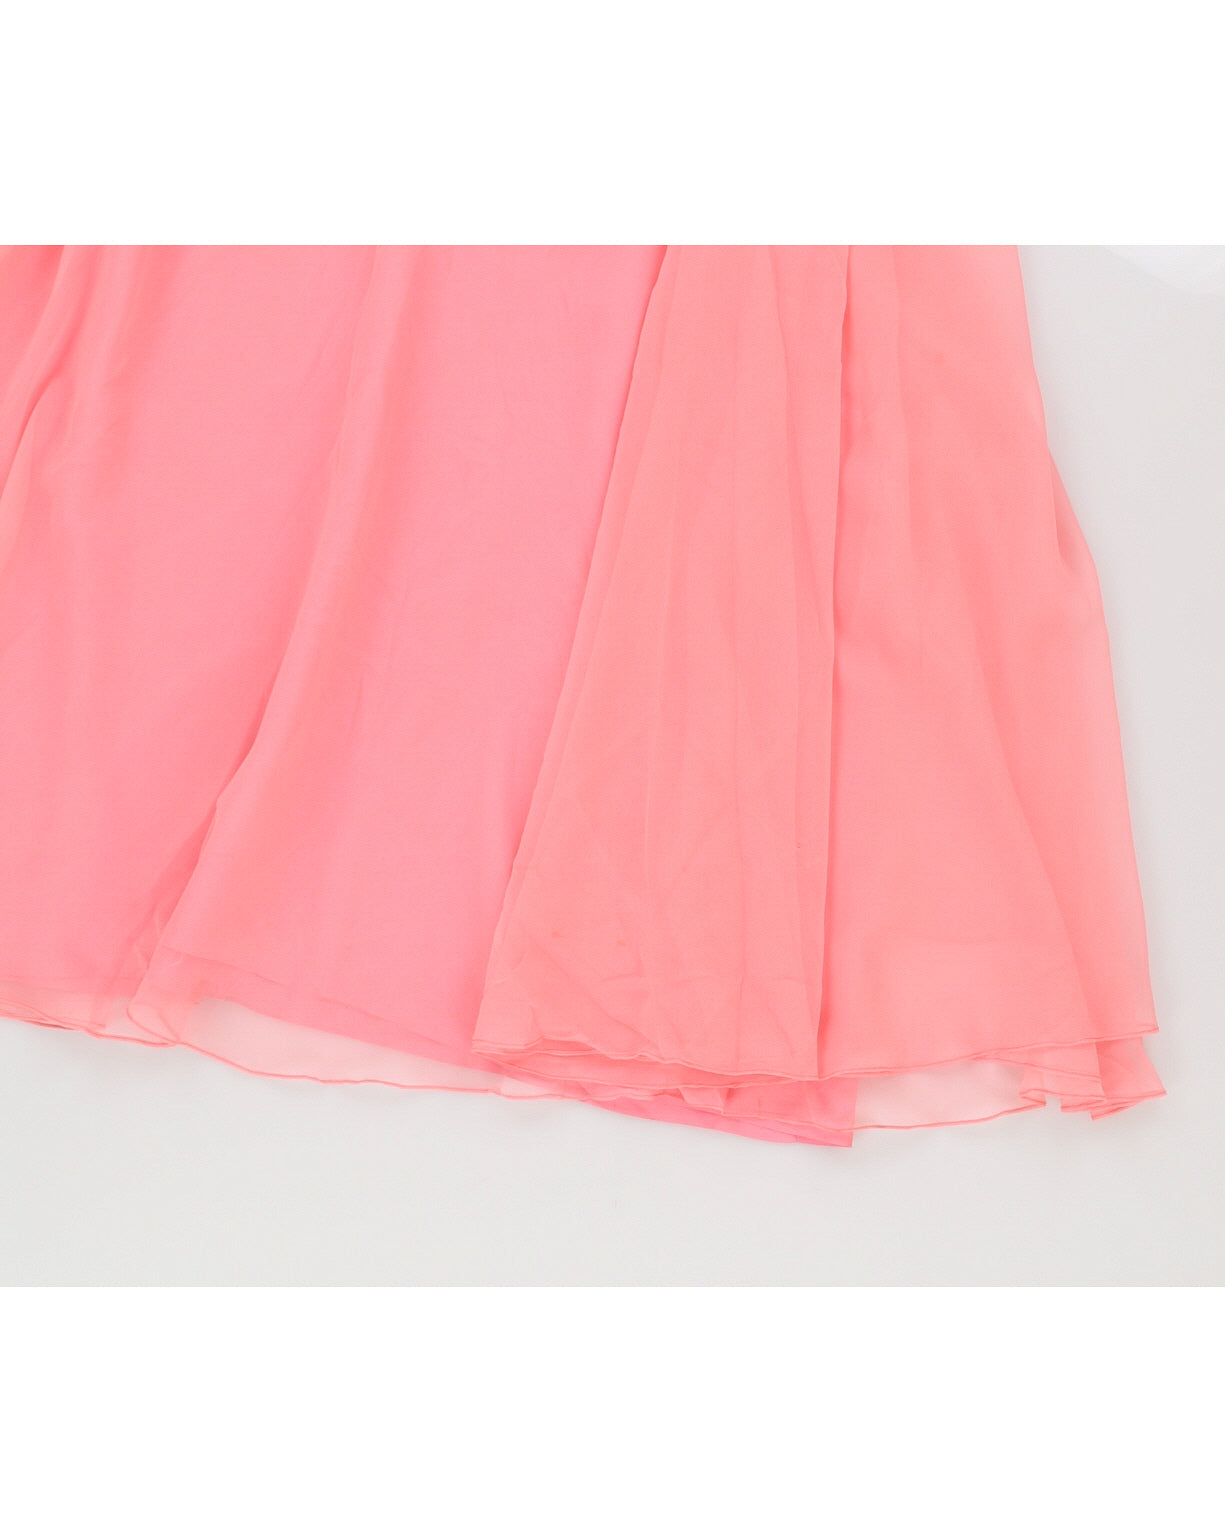 Vintage 1970s Pink Evening Gown - M / L